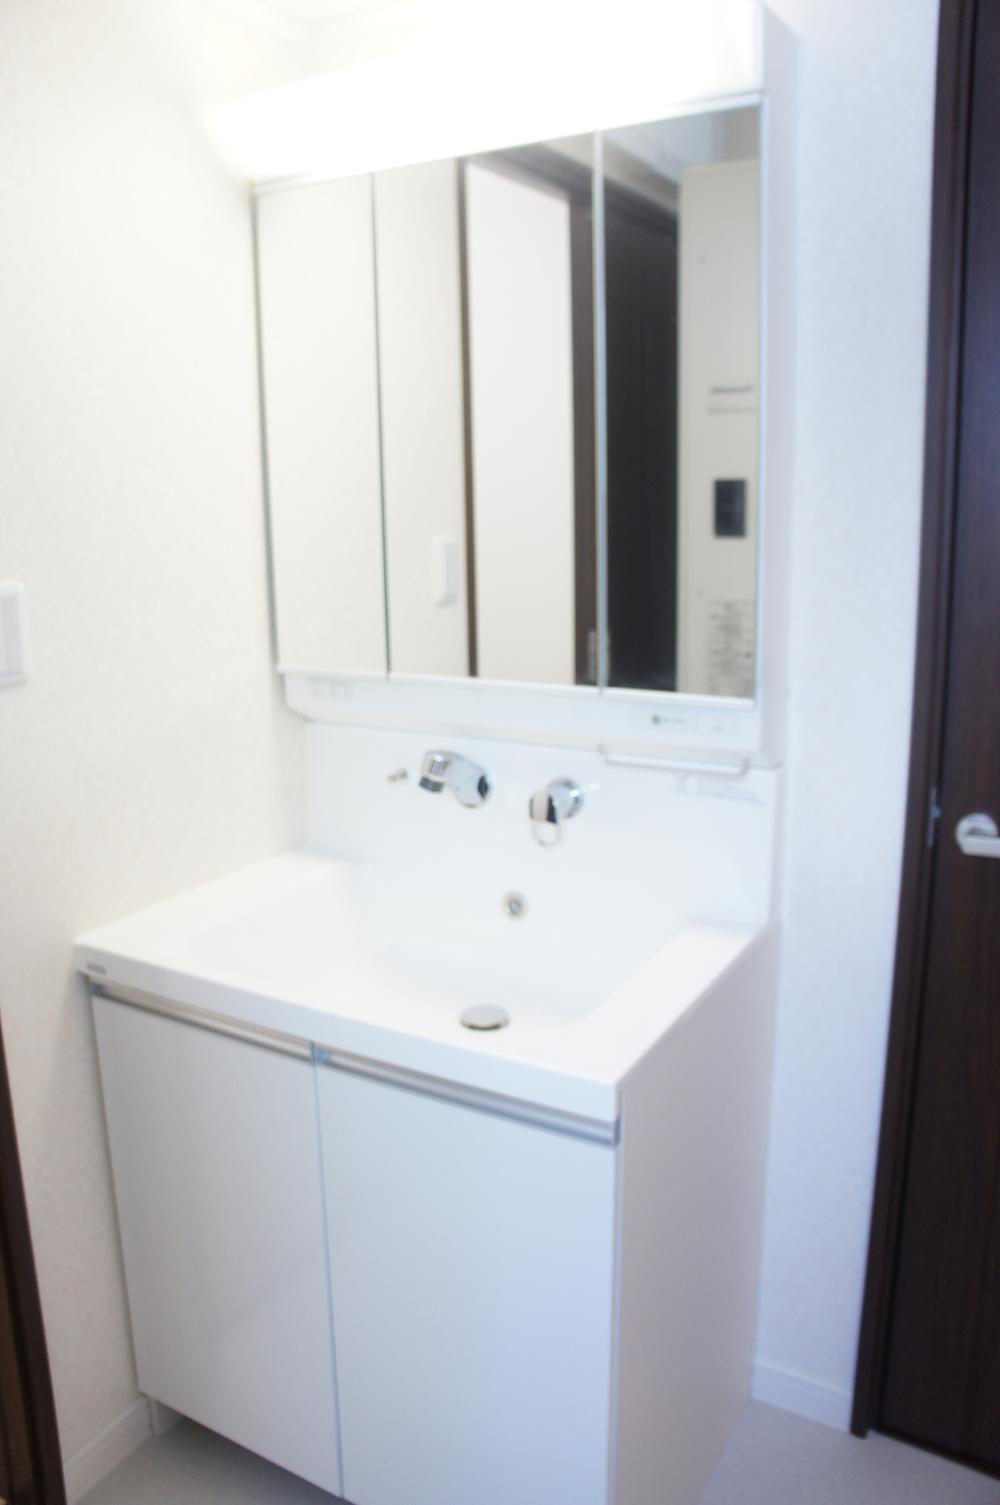 Wash basin, toilet. Bright three-sided mirror